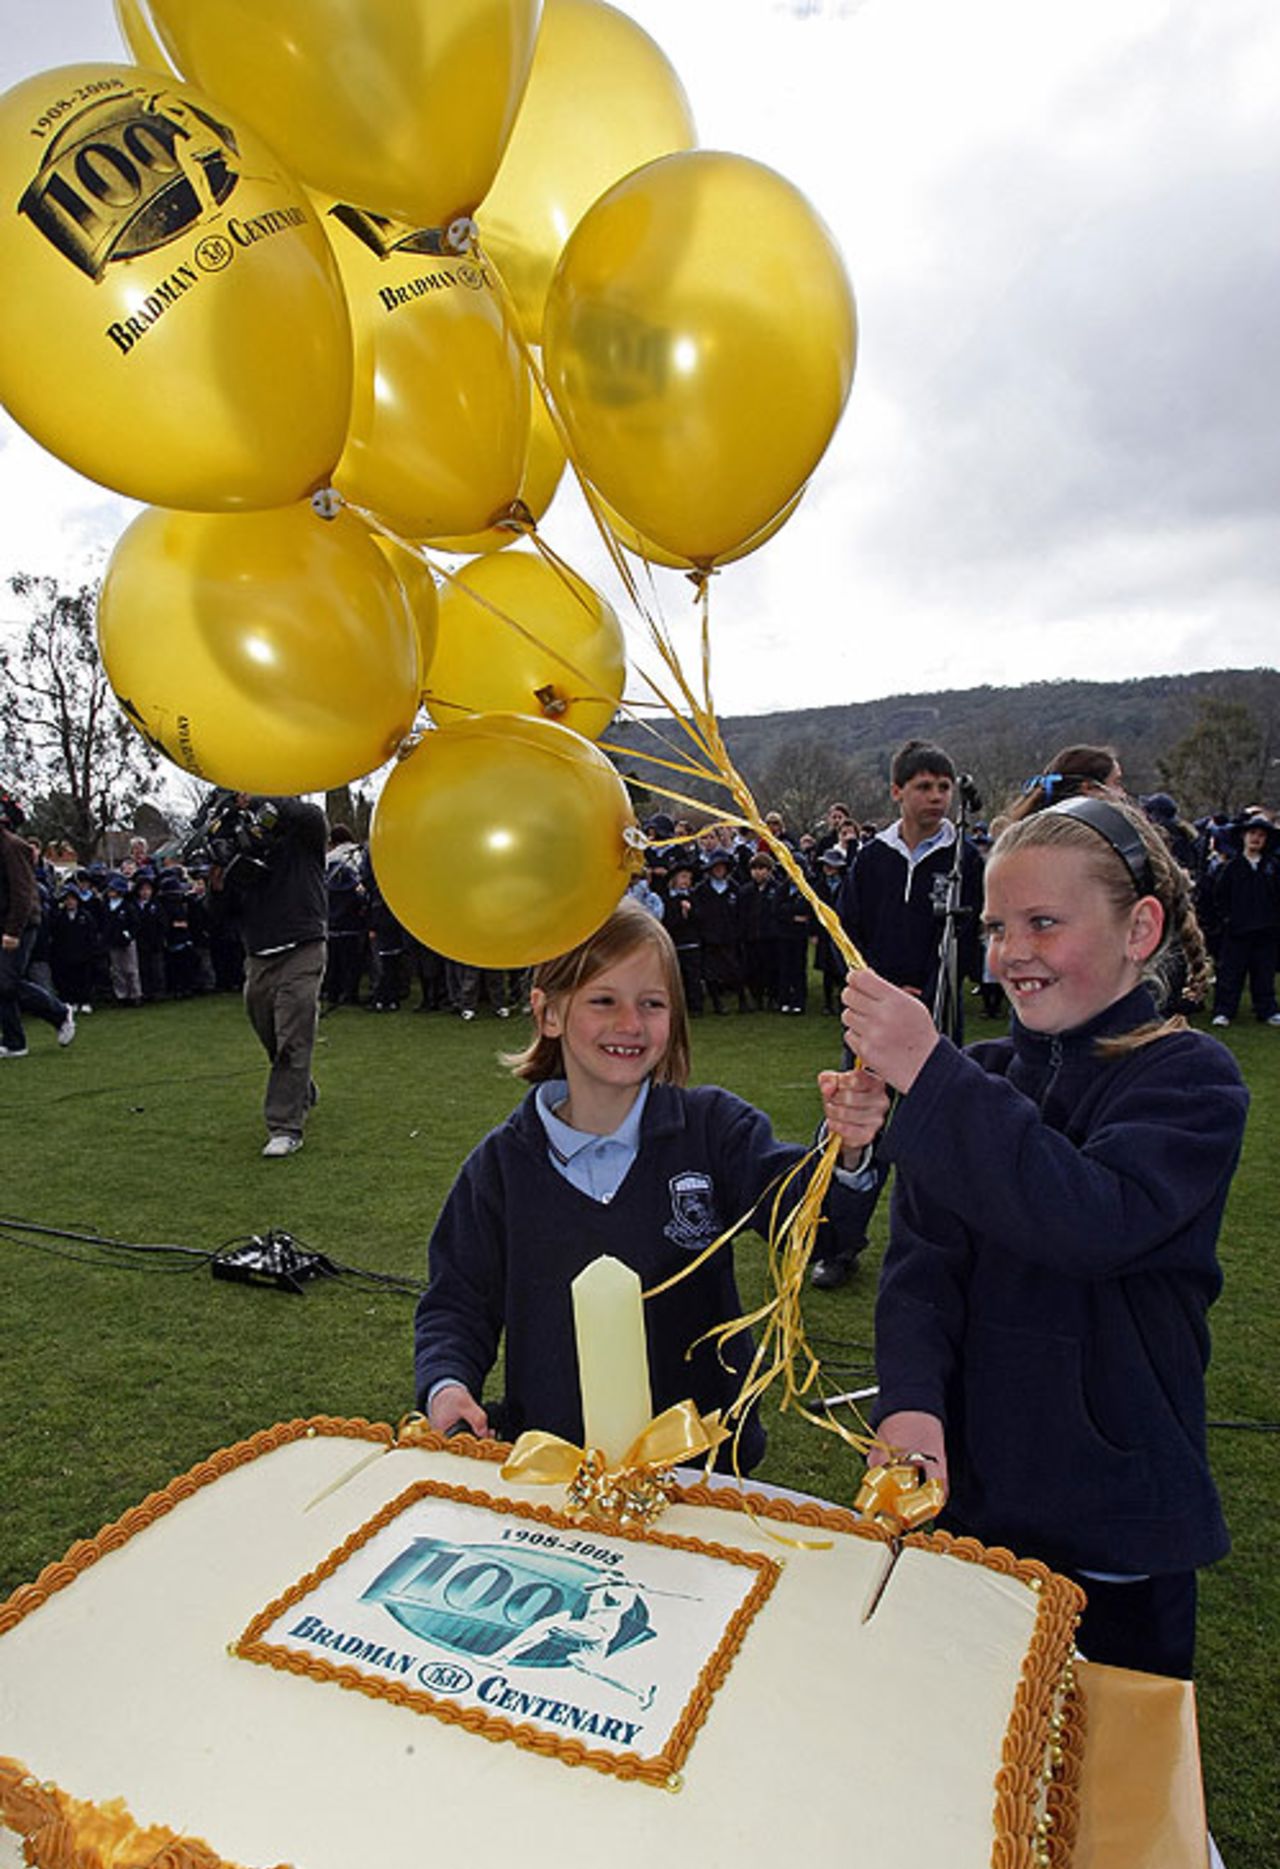 Schoolchildren prepare to cut a cake marking the centenary of Donald Bradman, Bowral, August 27, 2008